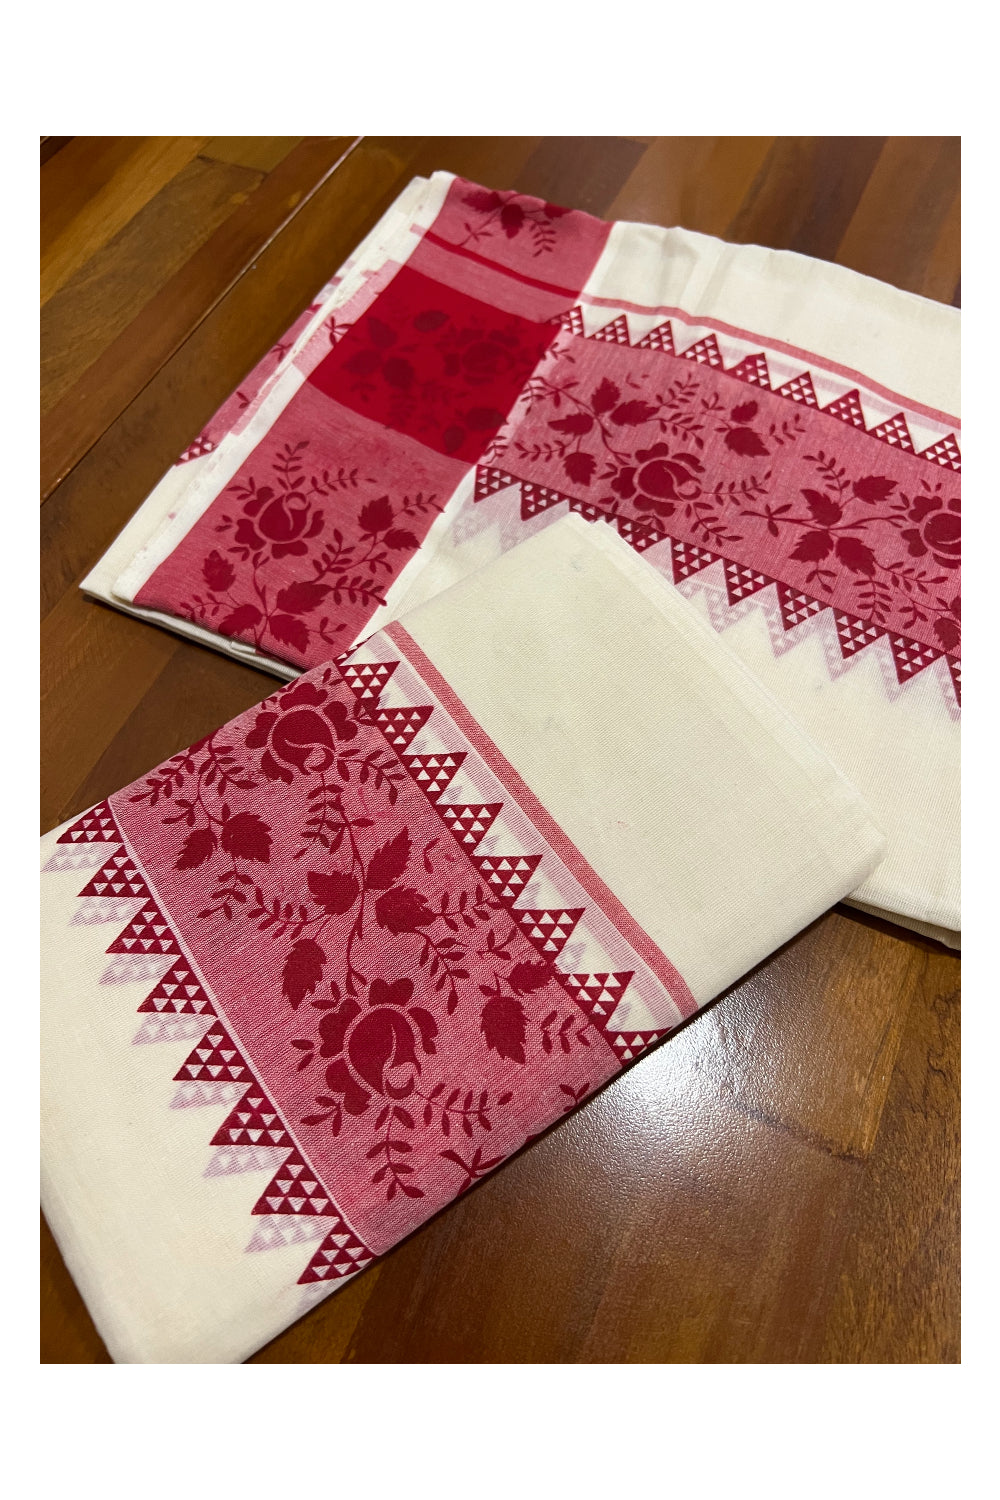 Kerala Cotton Set Mundu (Mundum Neriyathum) with Red Floral Temple Block Prints on Border